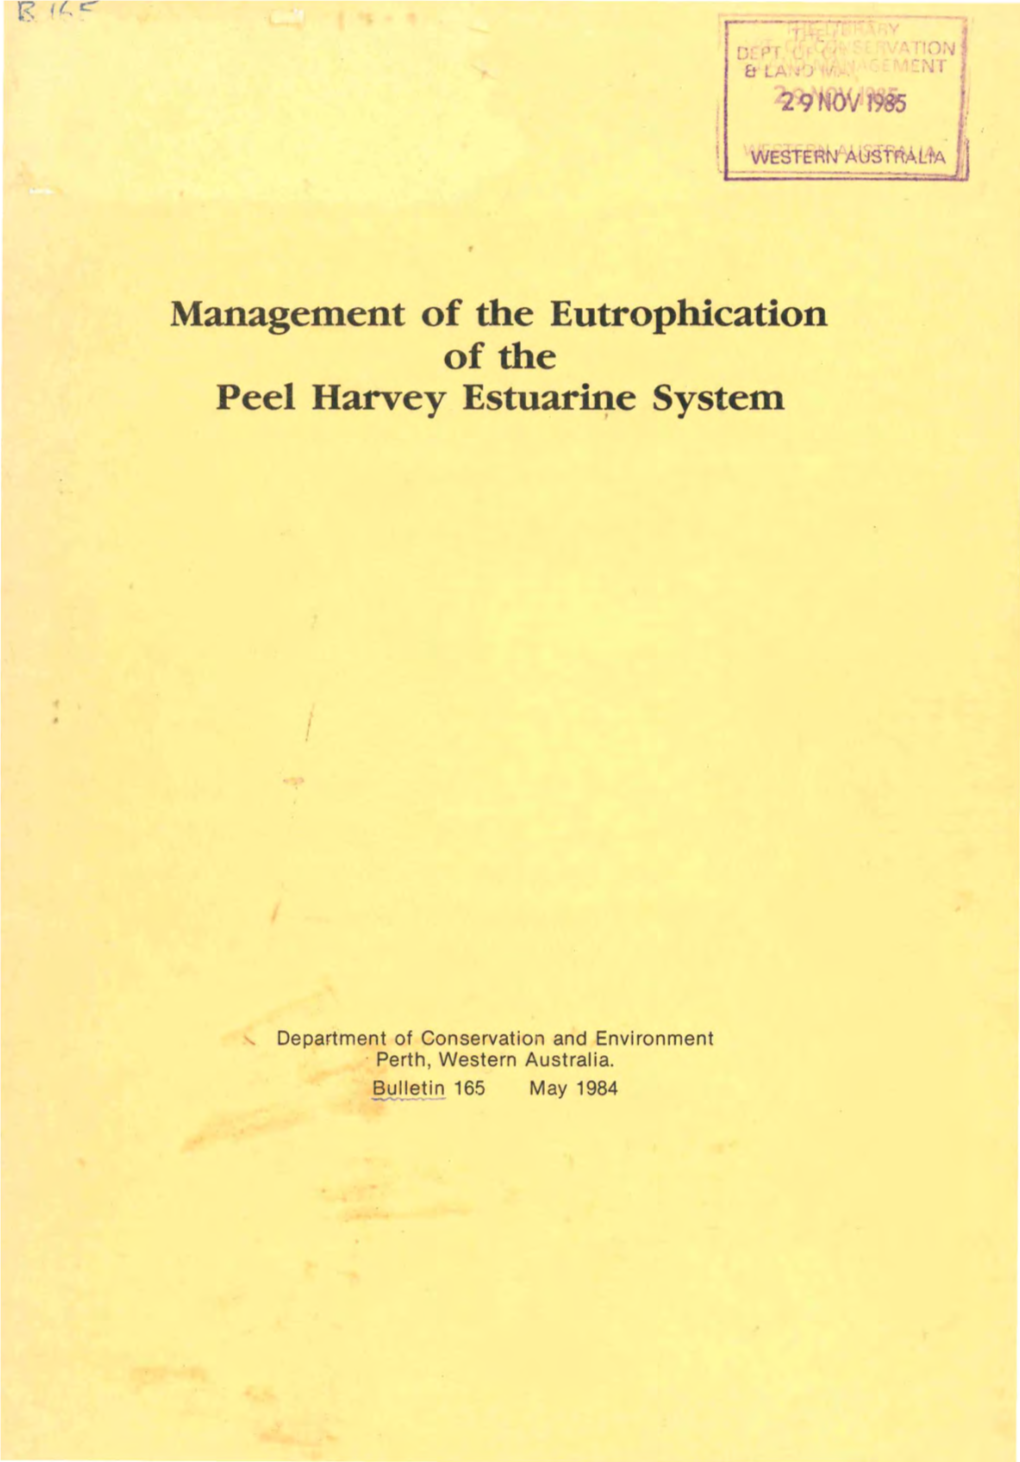 Management of the Eutrophication of the Peel Harvey Estuarine System